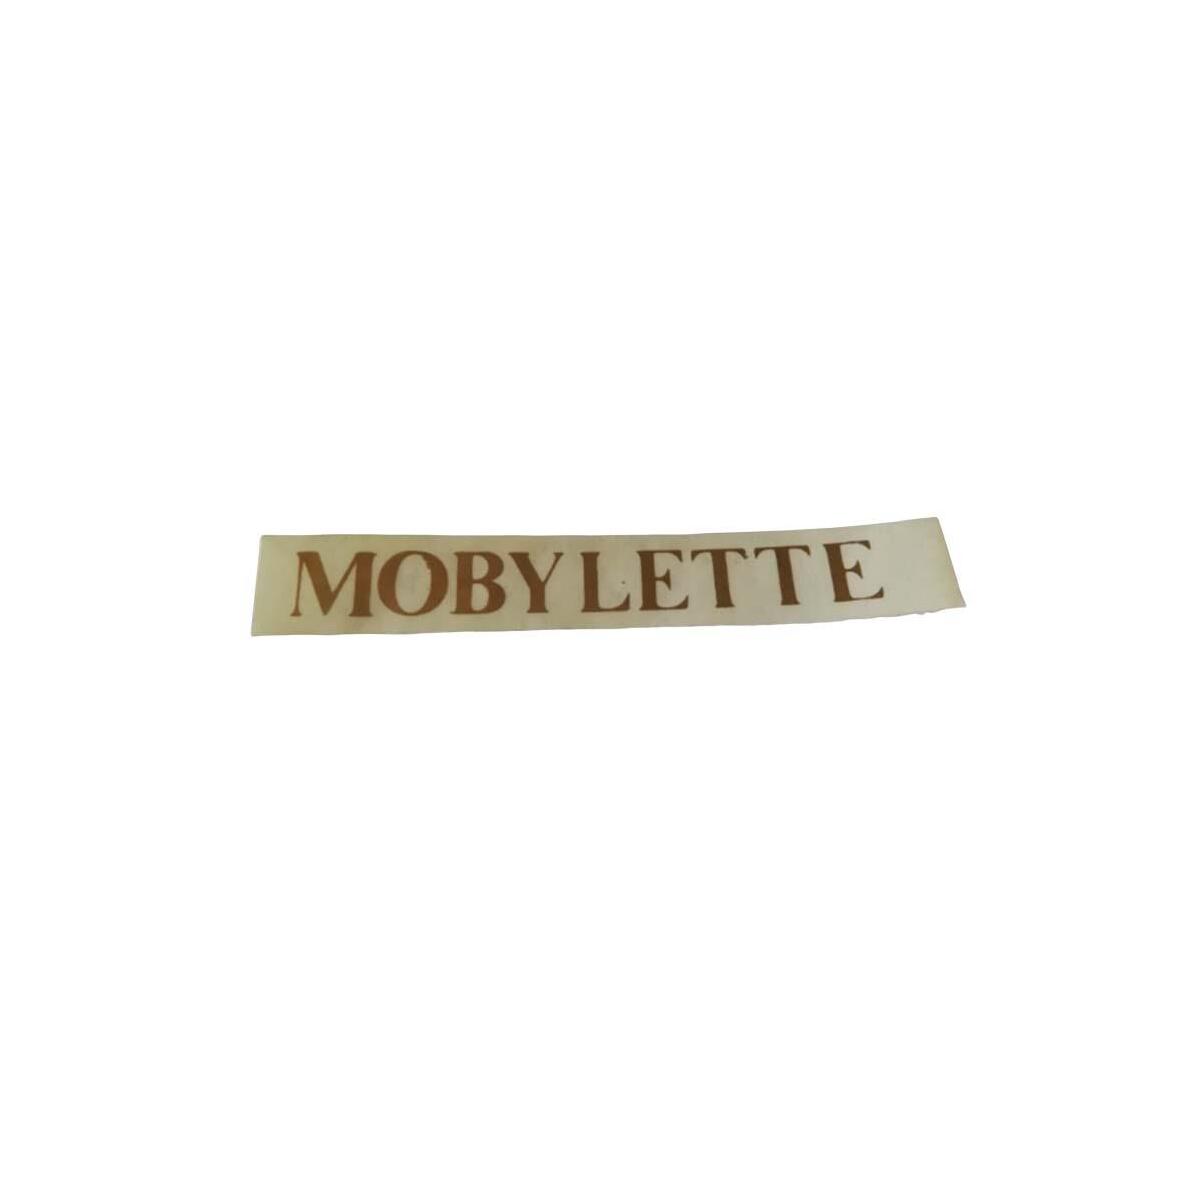 Mobylette Mobylette Depo Yazısı Altın Sarısı (14Cm)